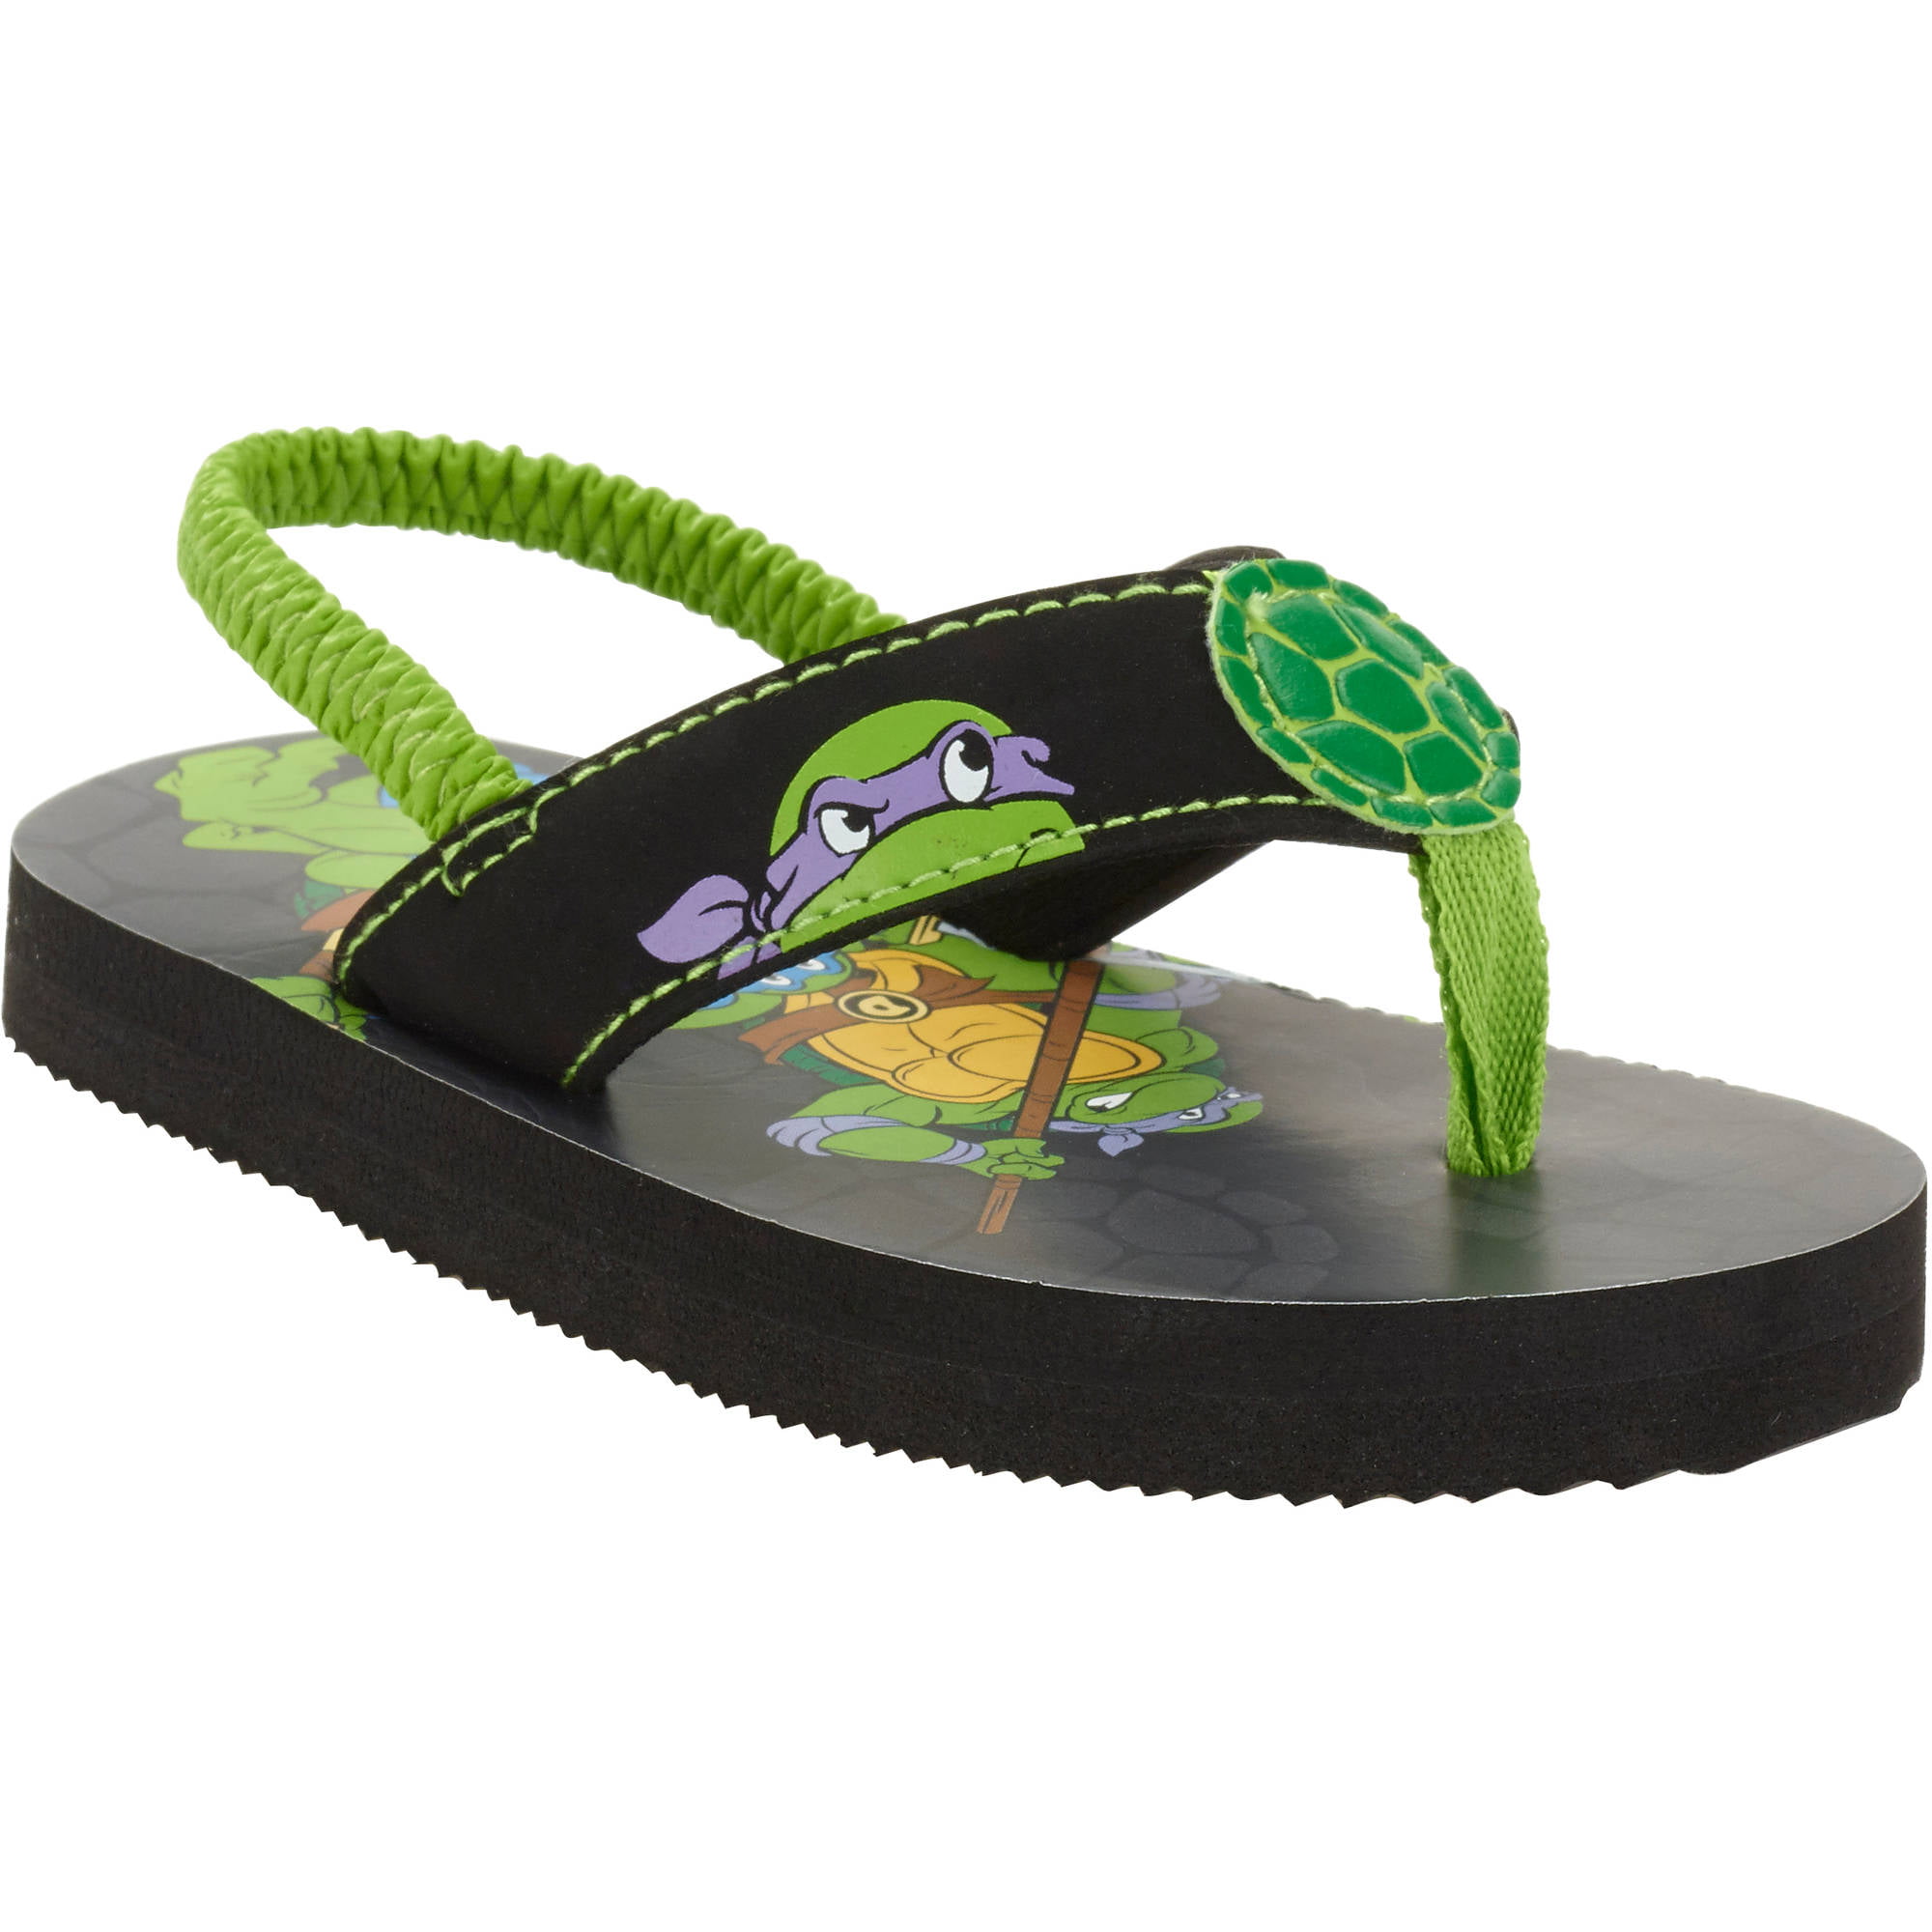 NWT Toddler Boys Summer Flip Flop Sandal Shoe TMNT Teenage Mutant Ninja Turtle